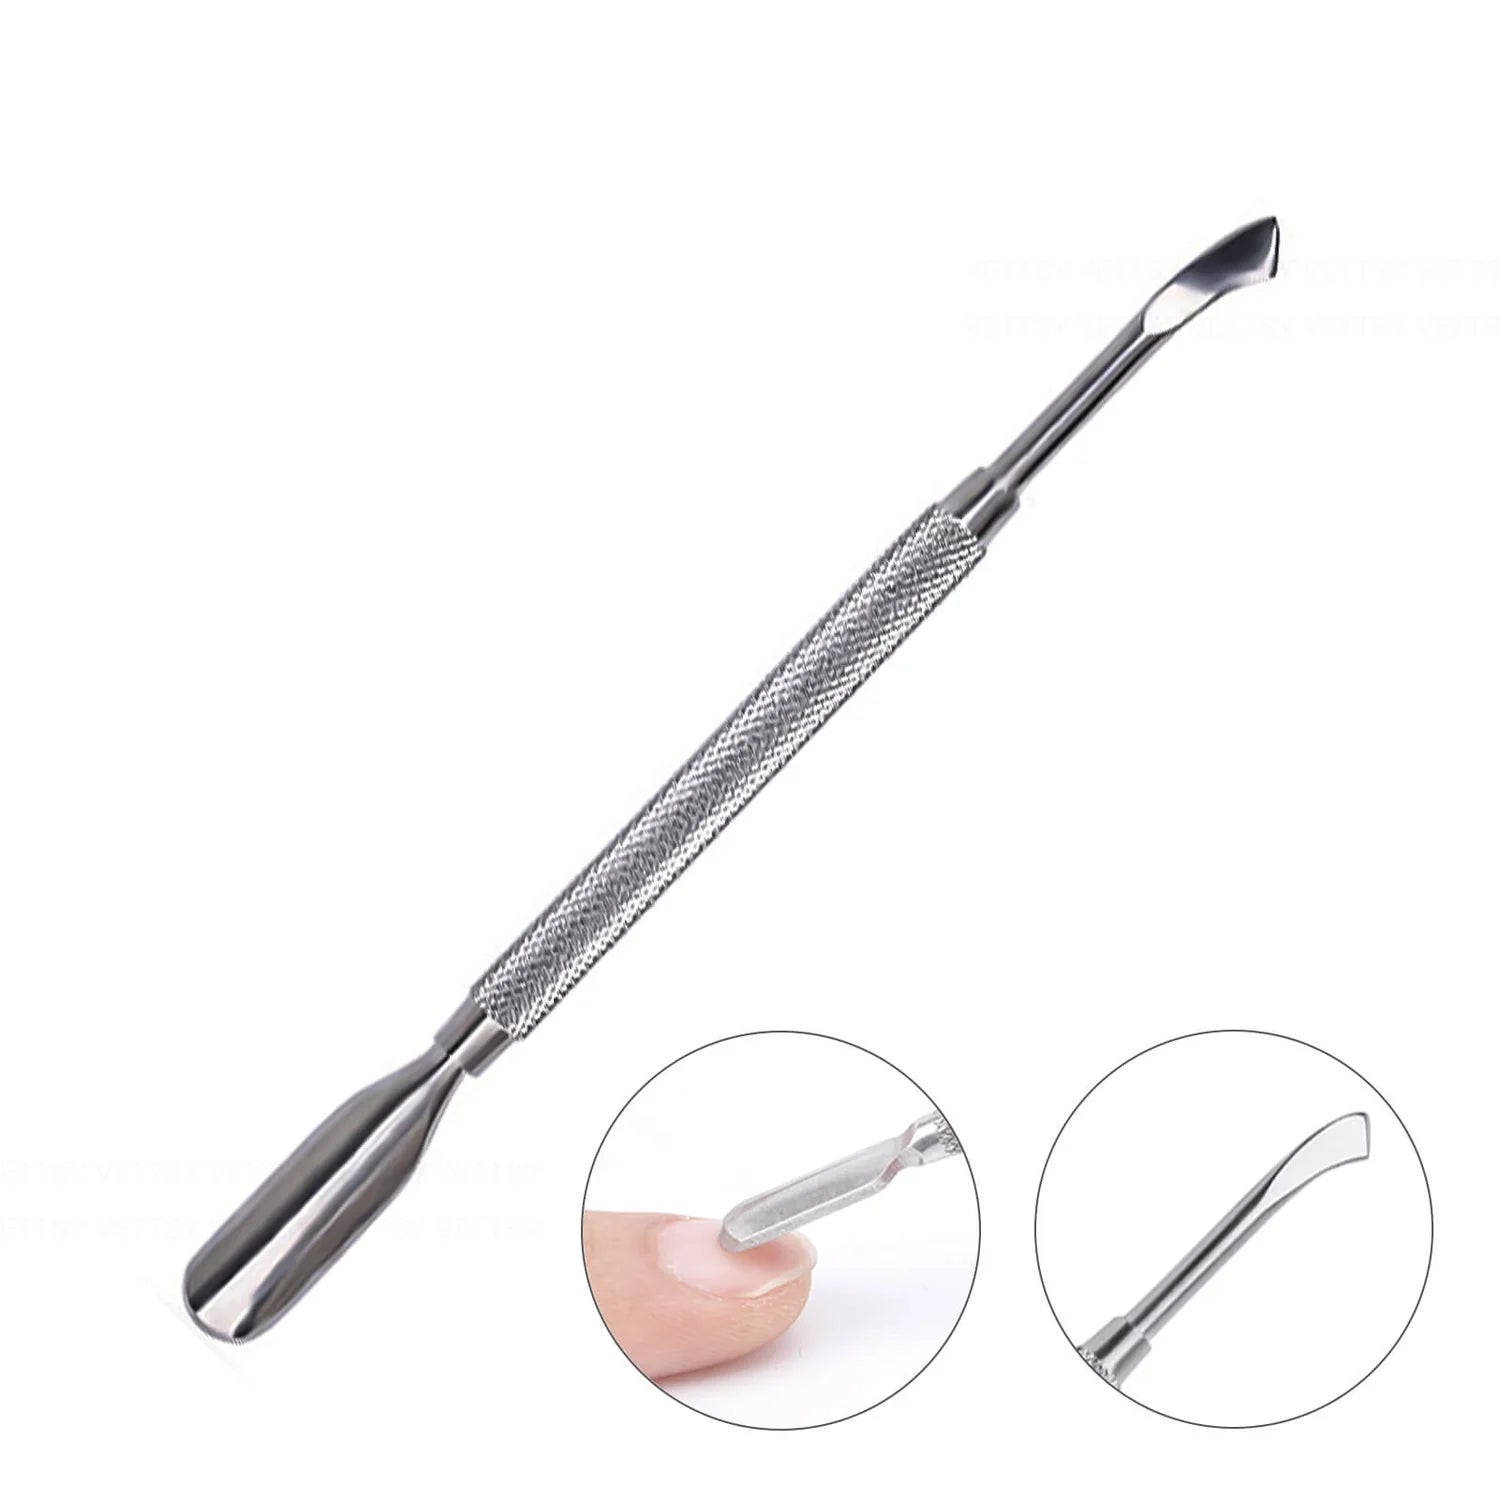 Steel cuticle pusher - Long